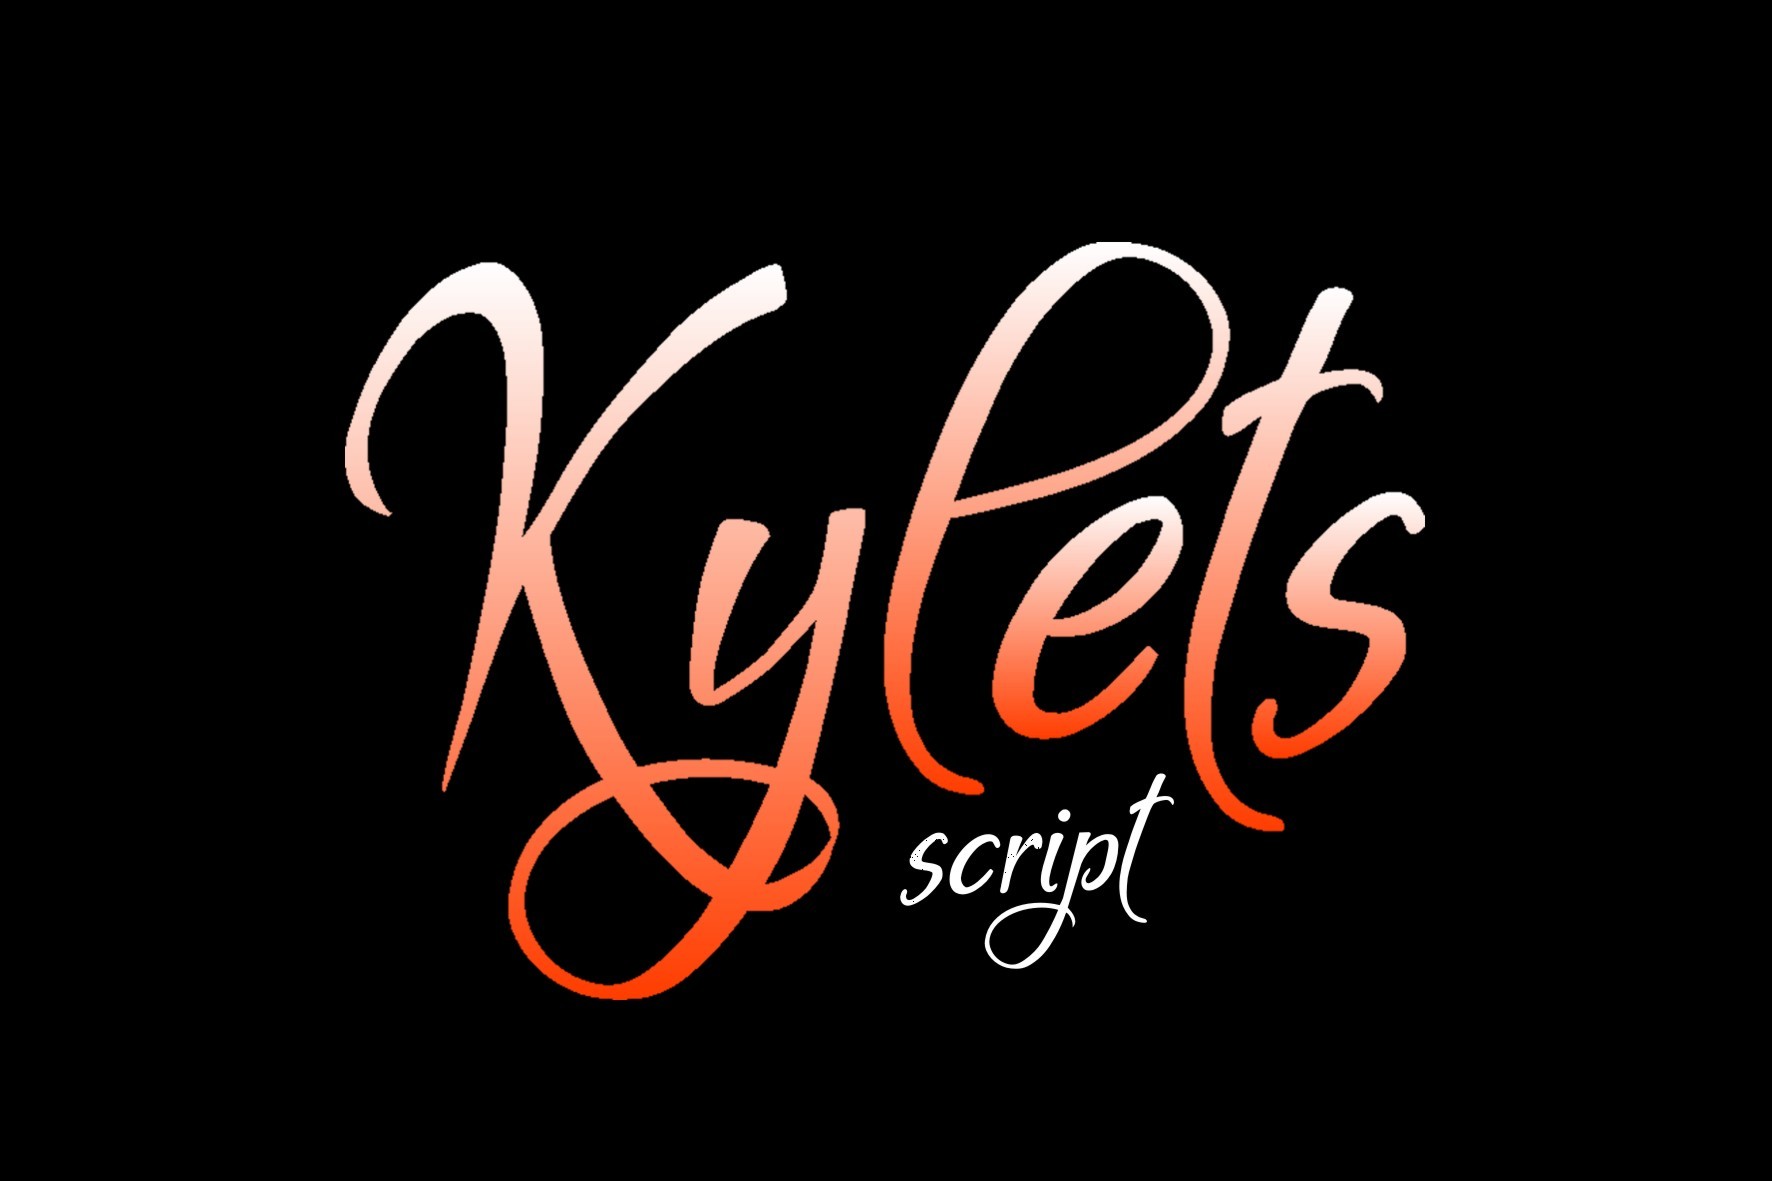 Kylets